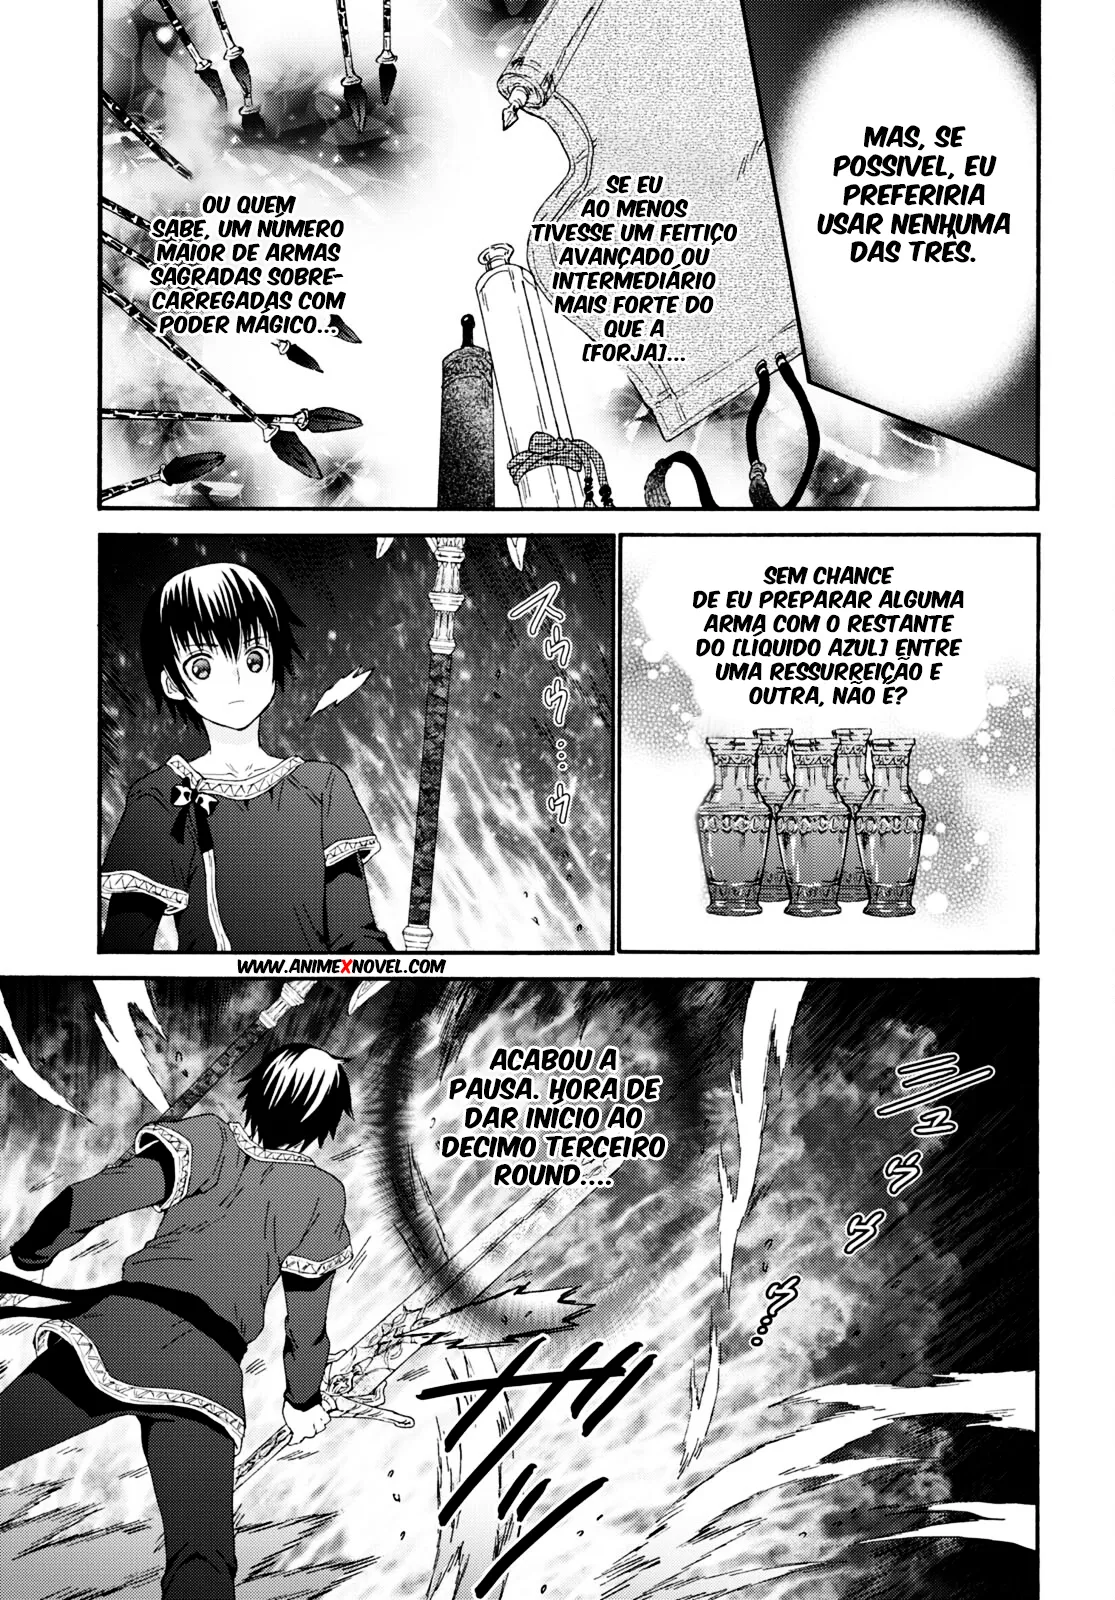 Comic Dragon Age: Death March Kara Hajimaru Isekai Kyousoukyoku / Death March To The Parallel World Rhapsody Manga 92